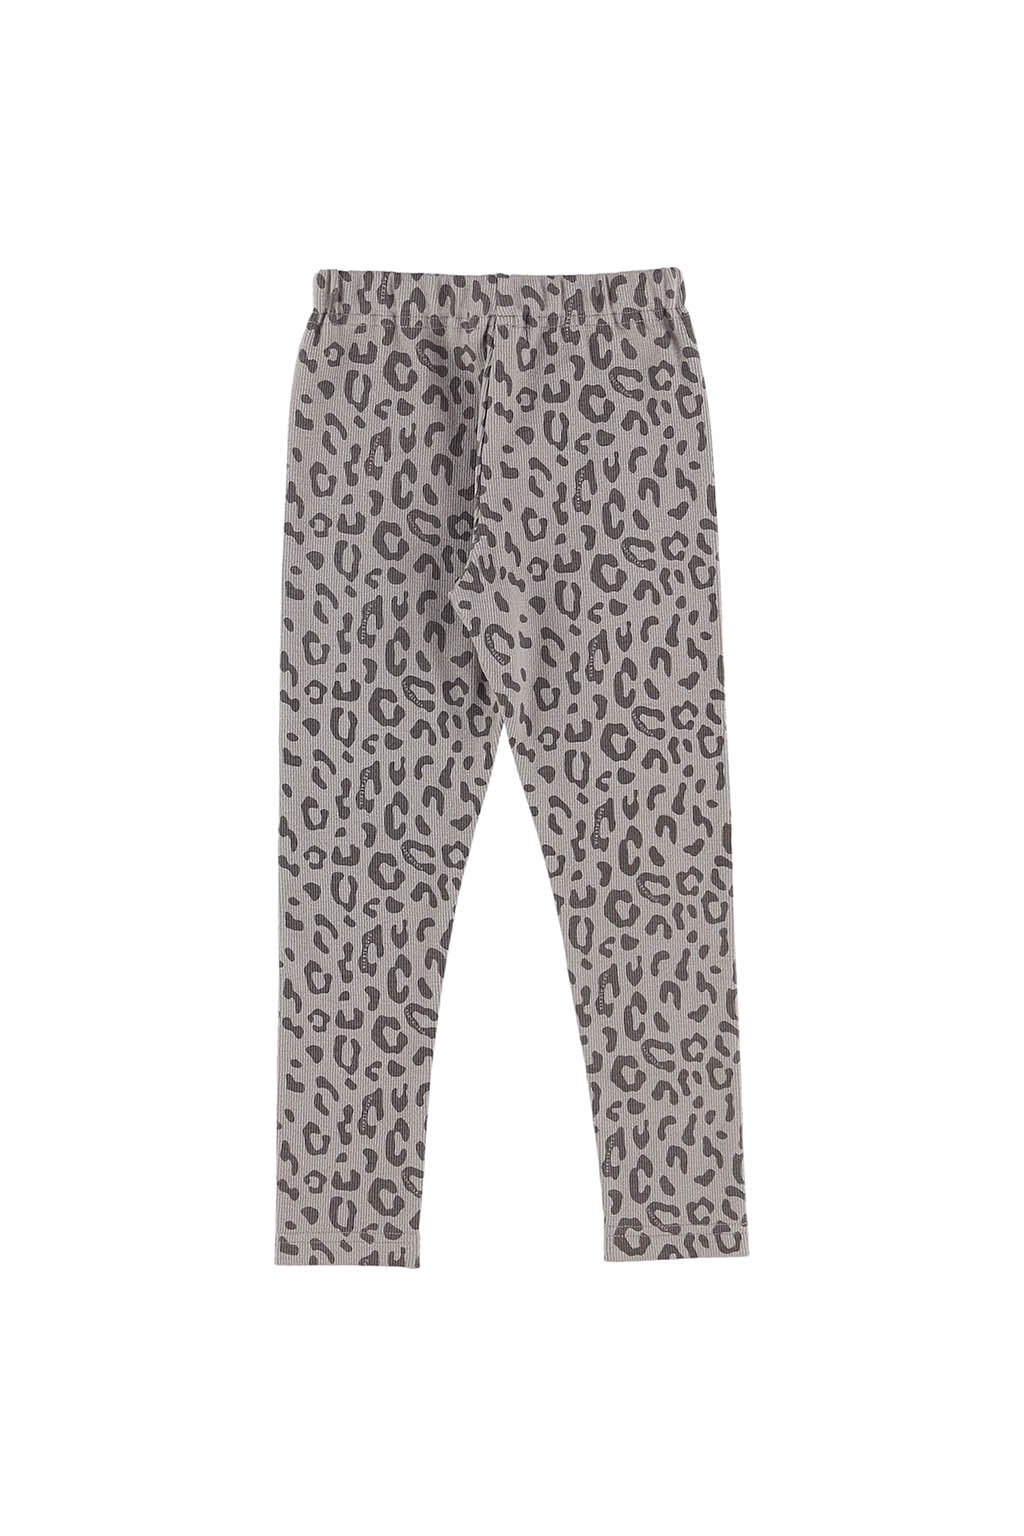 baby-alexia-leopard-leggings-gray-05